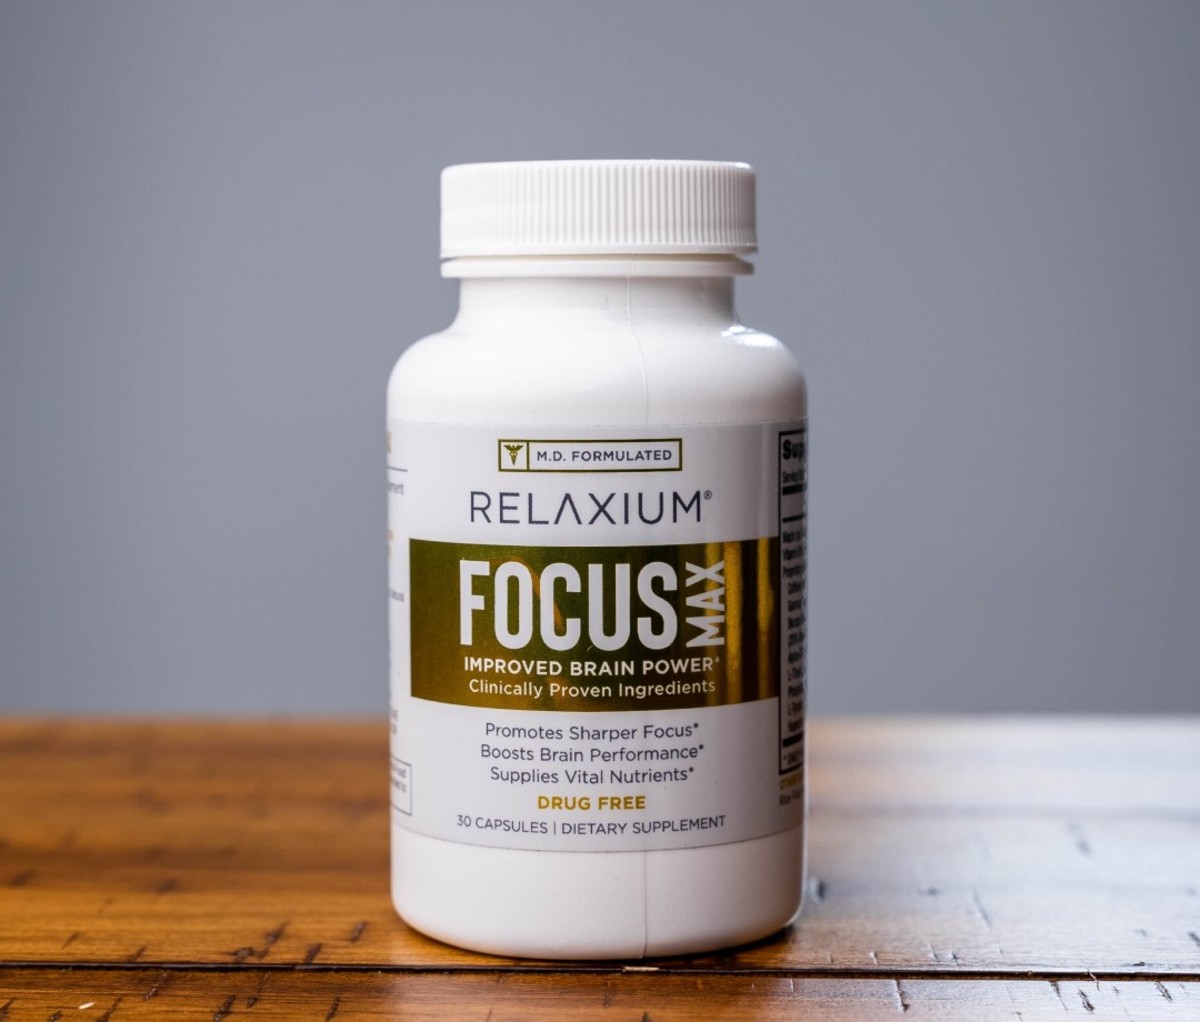 Relaxium Focus supplement bottle with gold label